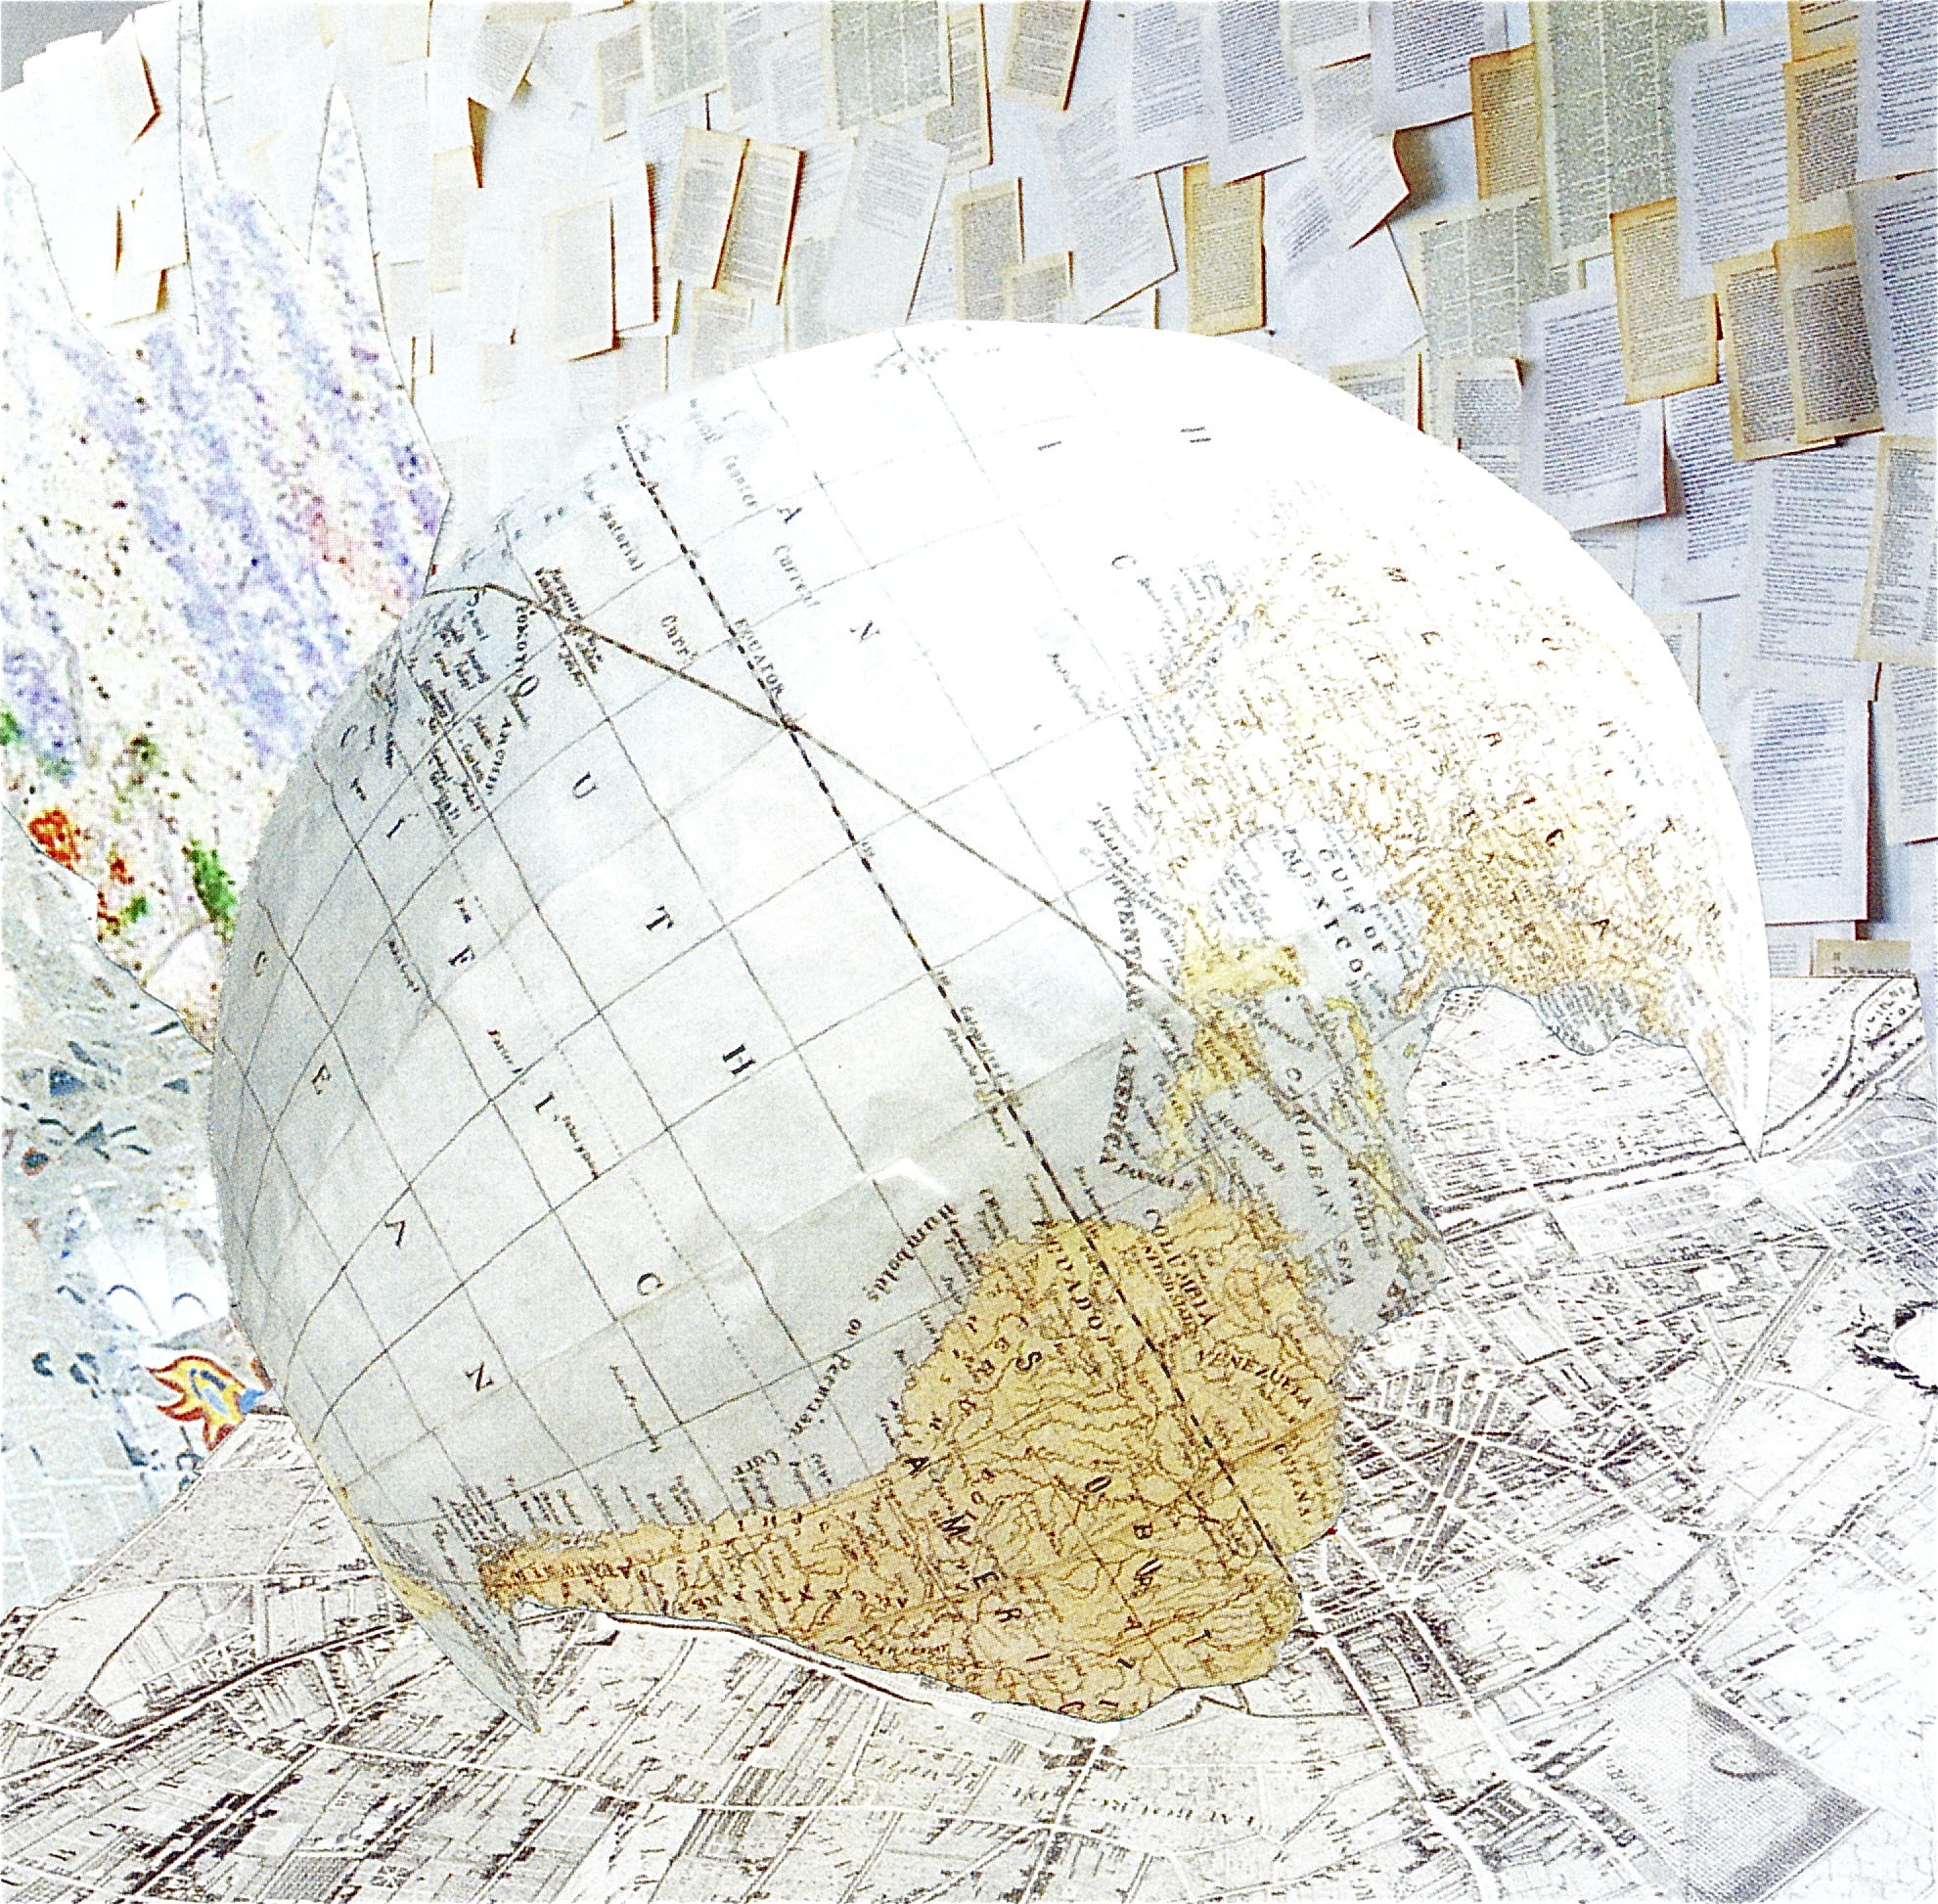 Soft Crash, Collage, 2012, 5" x 5"